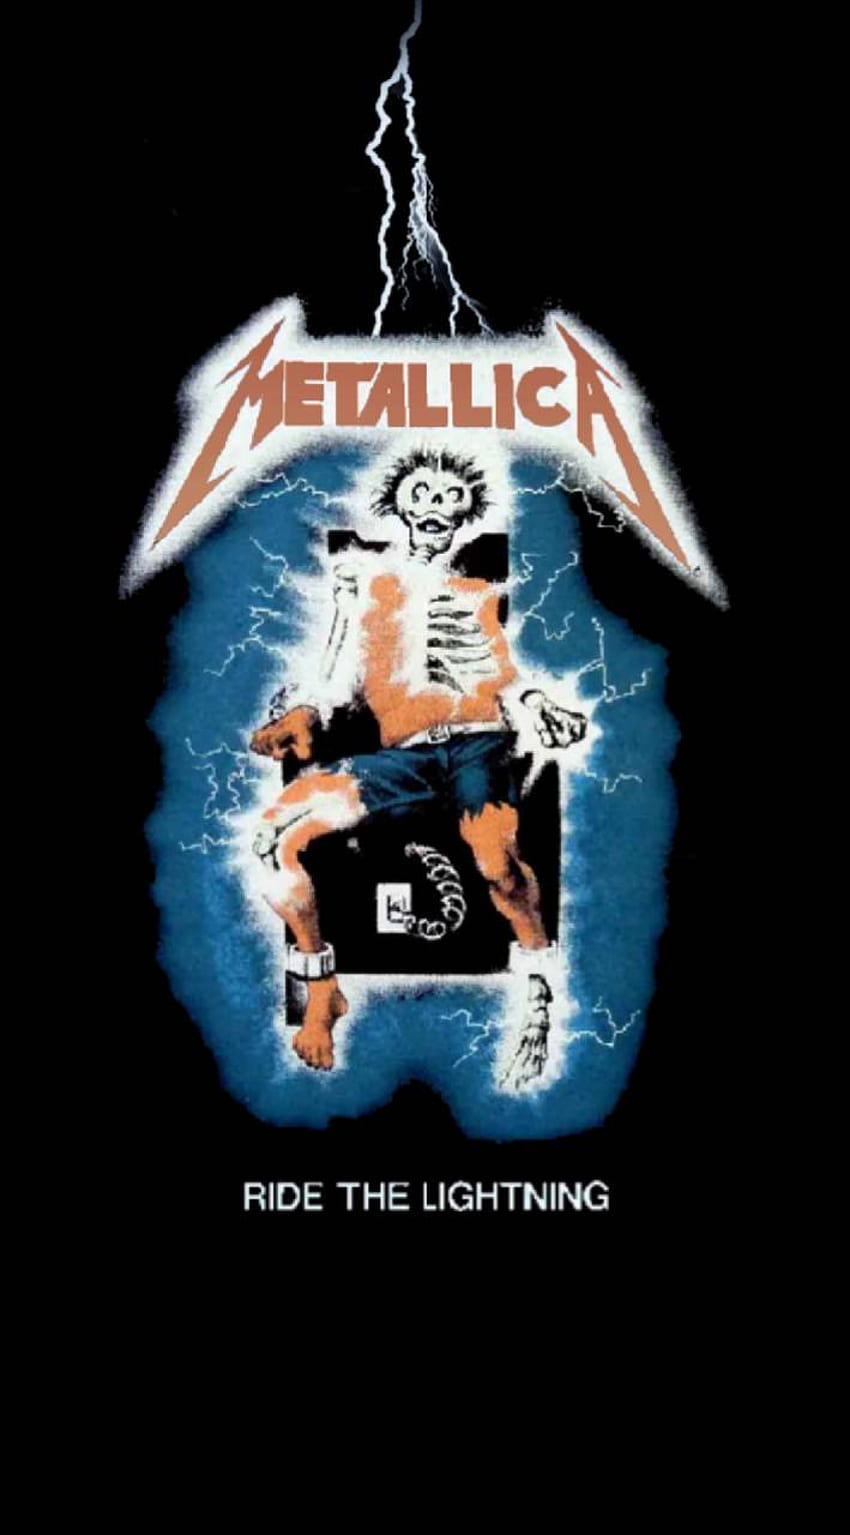 1920x1080px 1080p Free Download Metallica Ride The Lightning Hd Phone Wallpaper Pxfuel